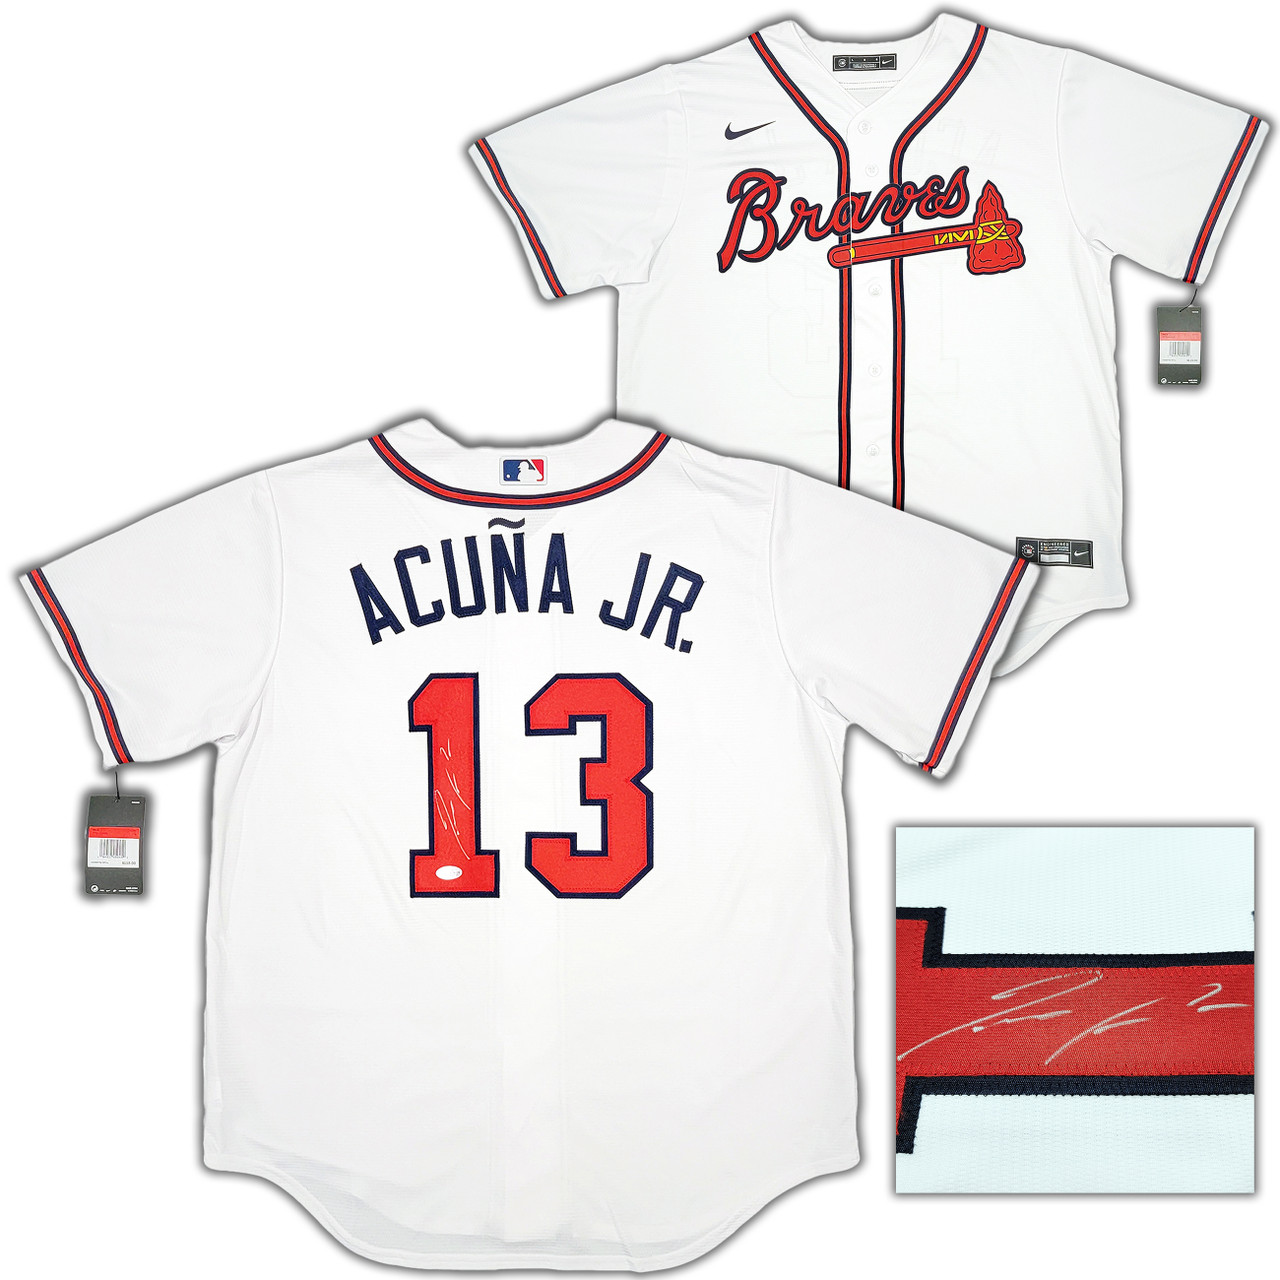 Ronald Acuna Jr Autographed and Framed Atlanta Braves Jersey